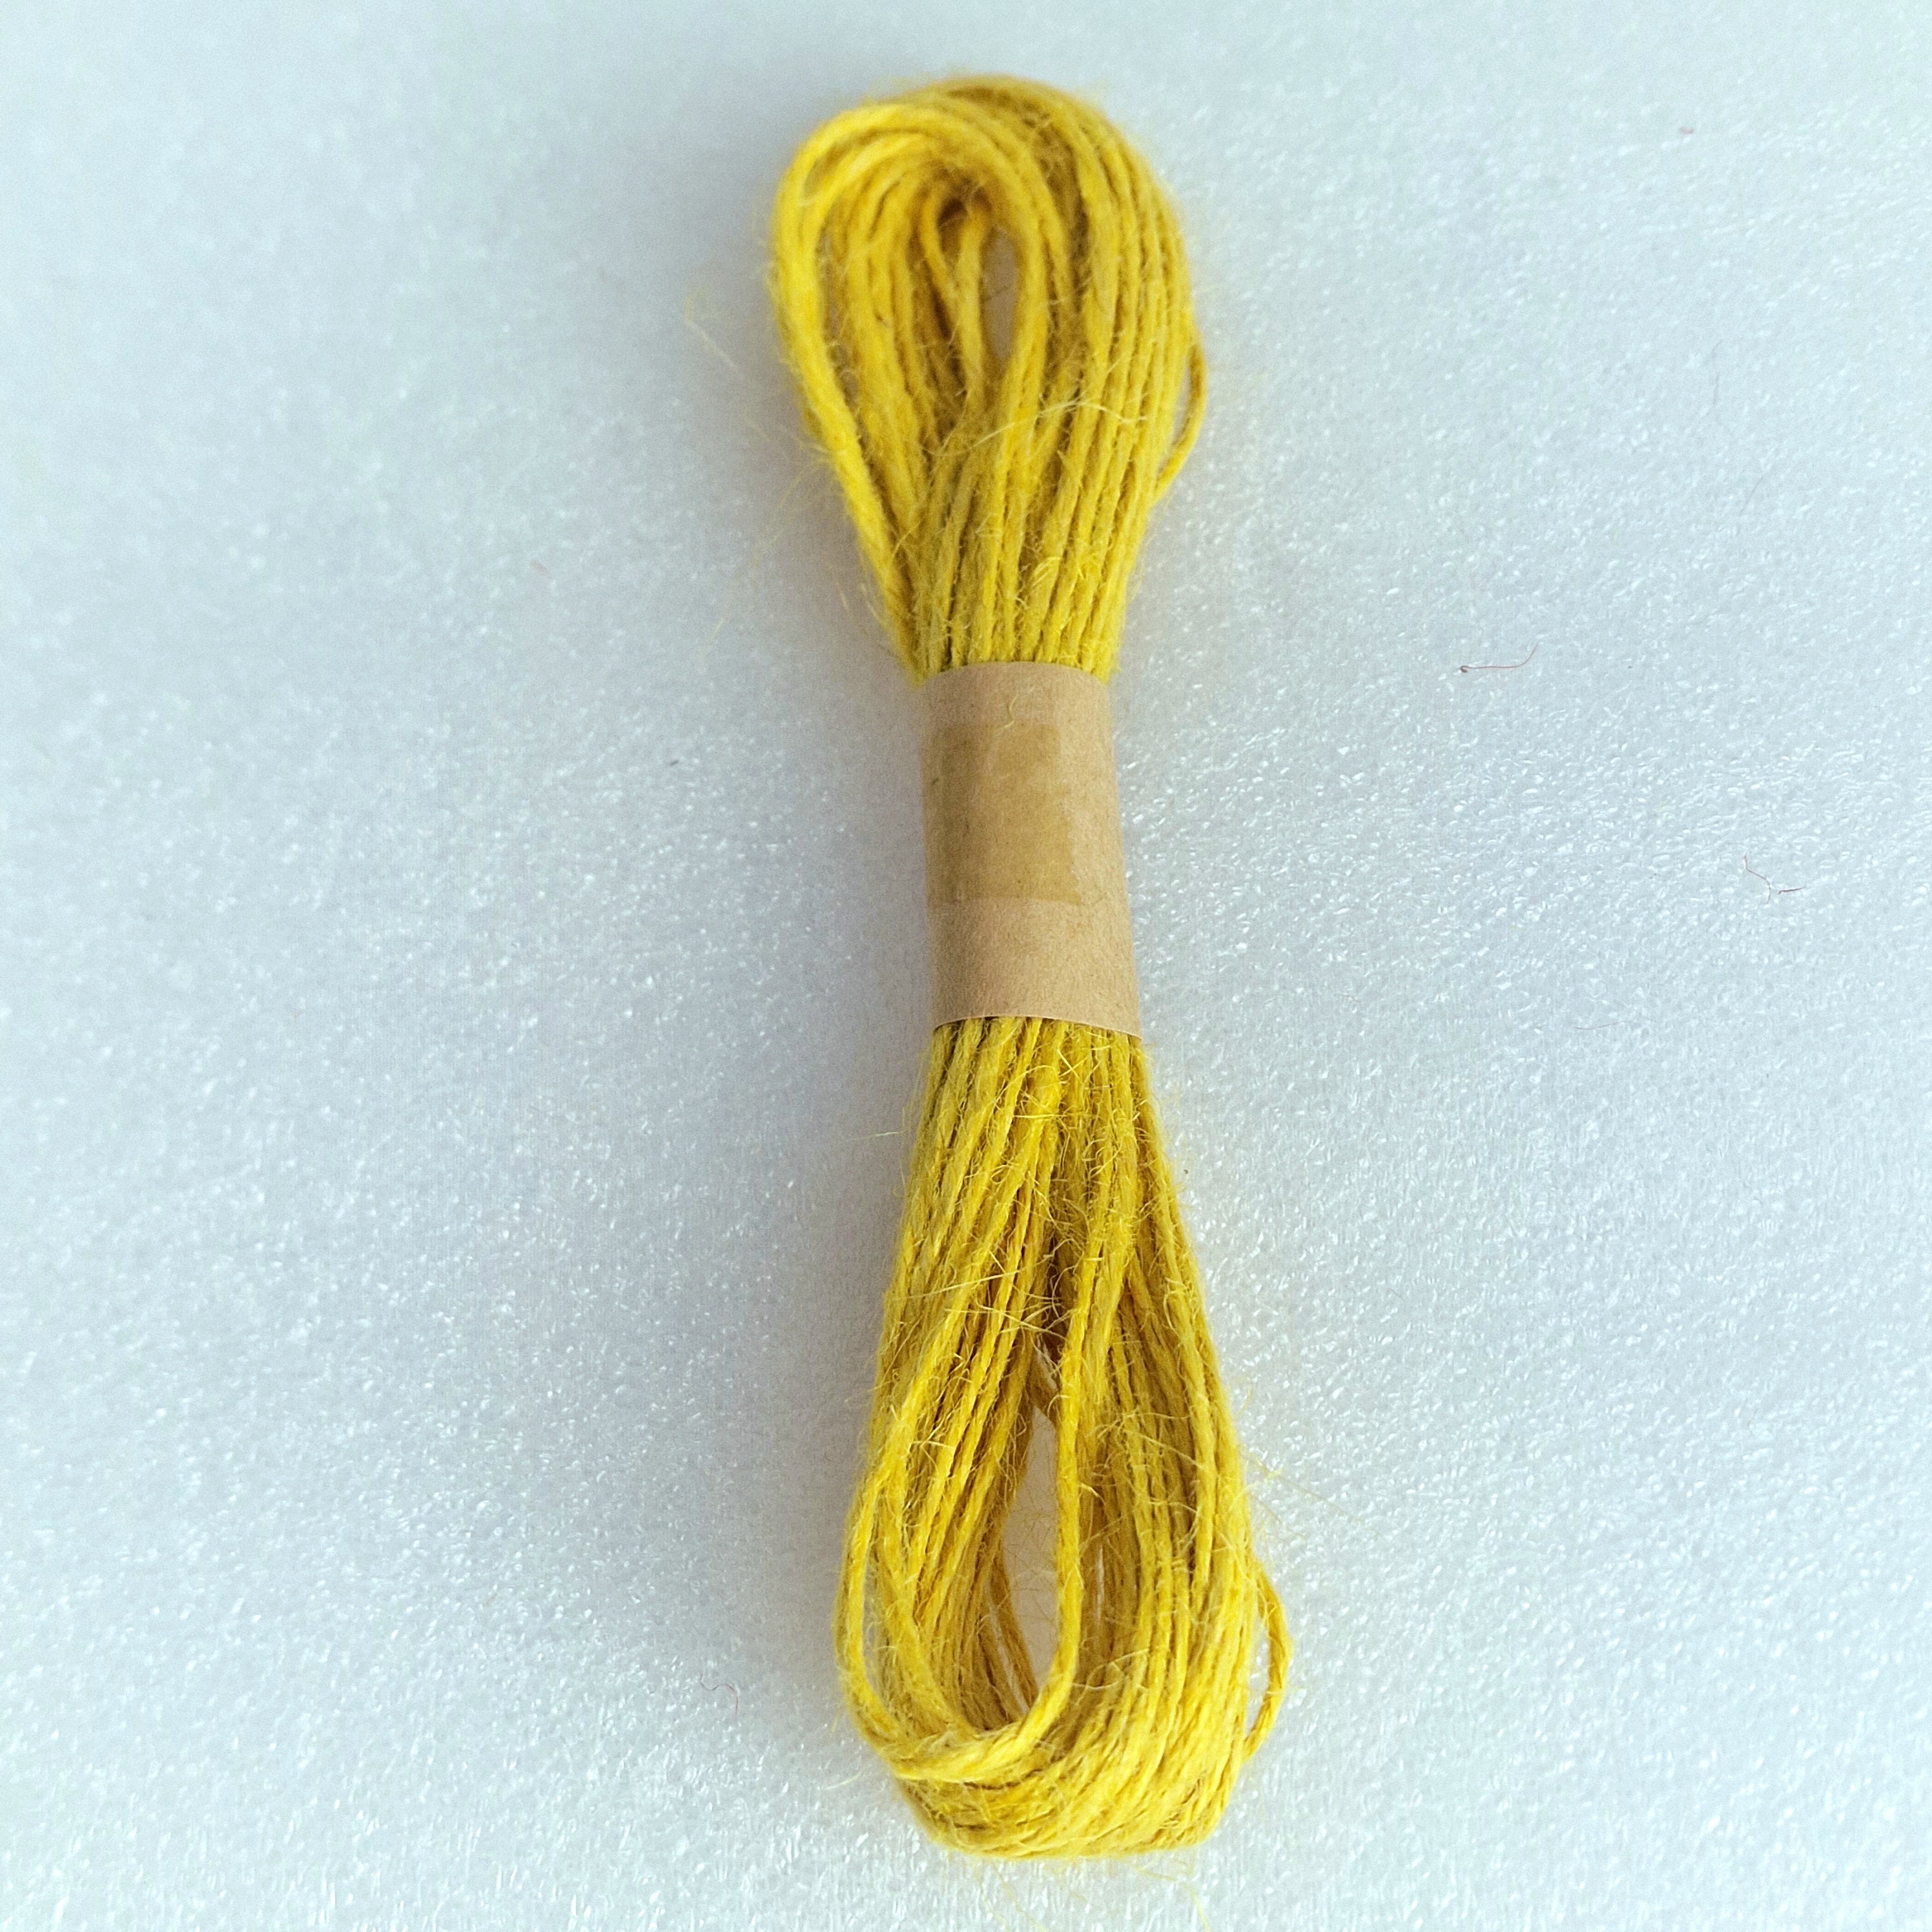 MajorCrafts 10metres 1mm thick Mustard Yellow Jute Twine String